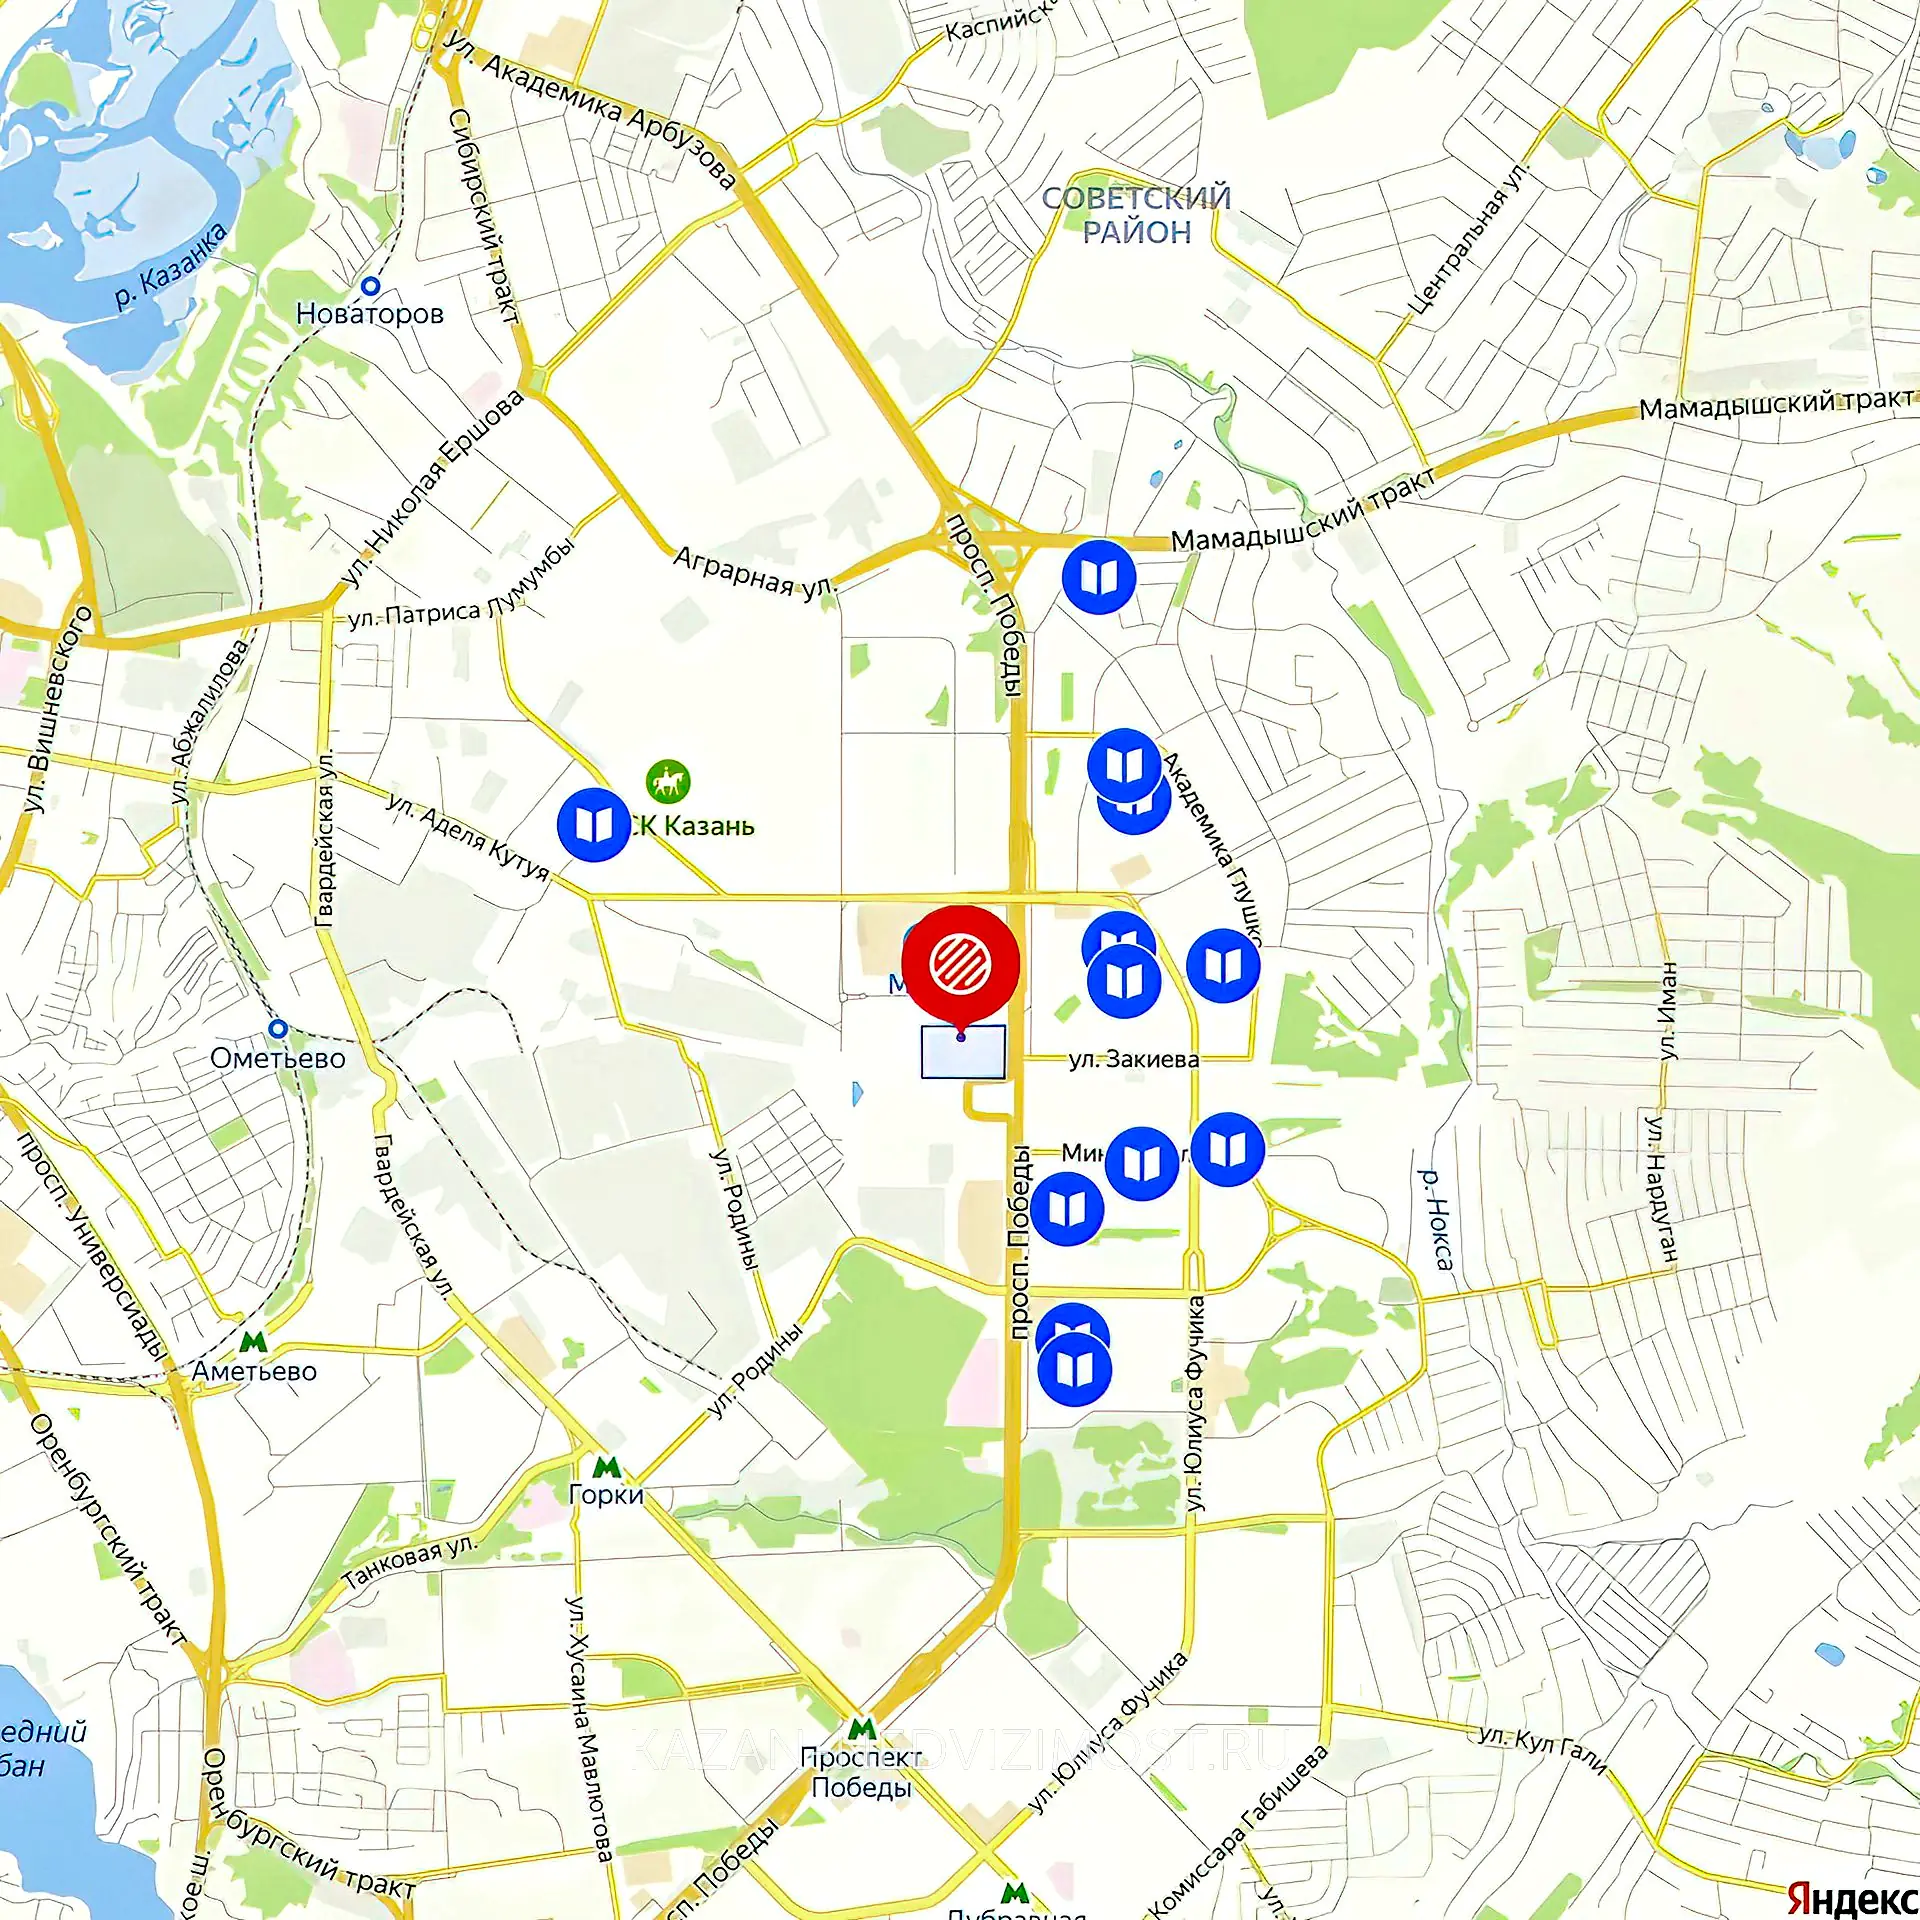 Расположение и маршрут на карте от ЖК Победа до центра города